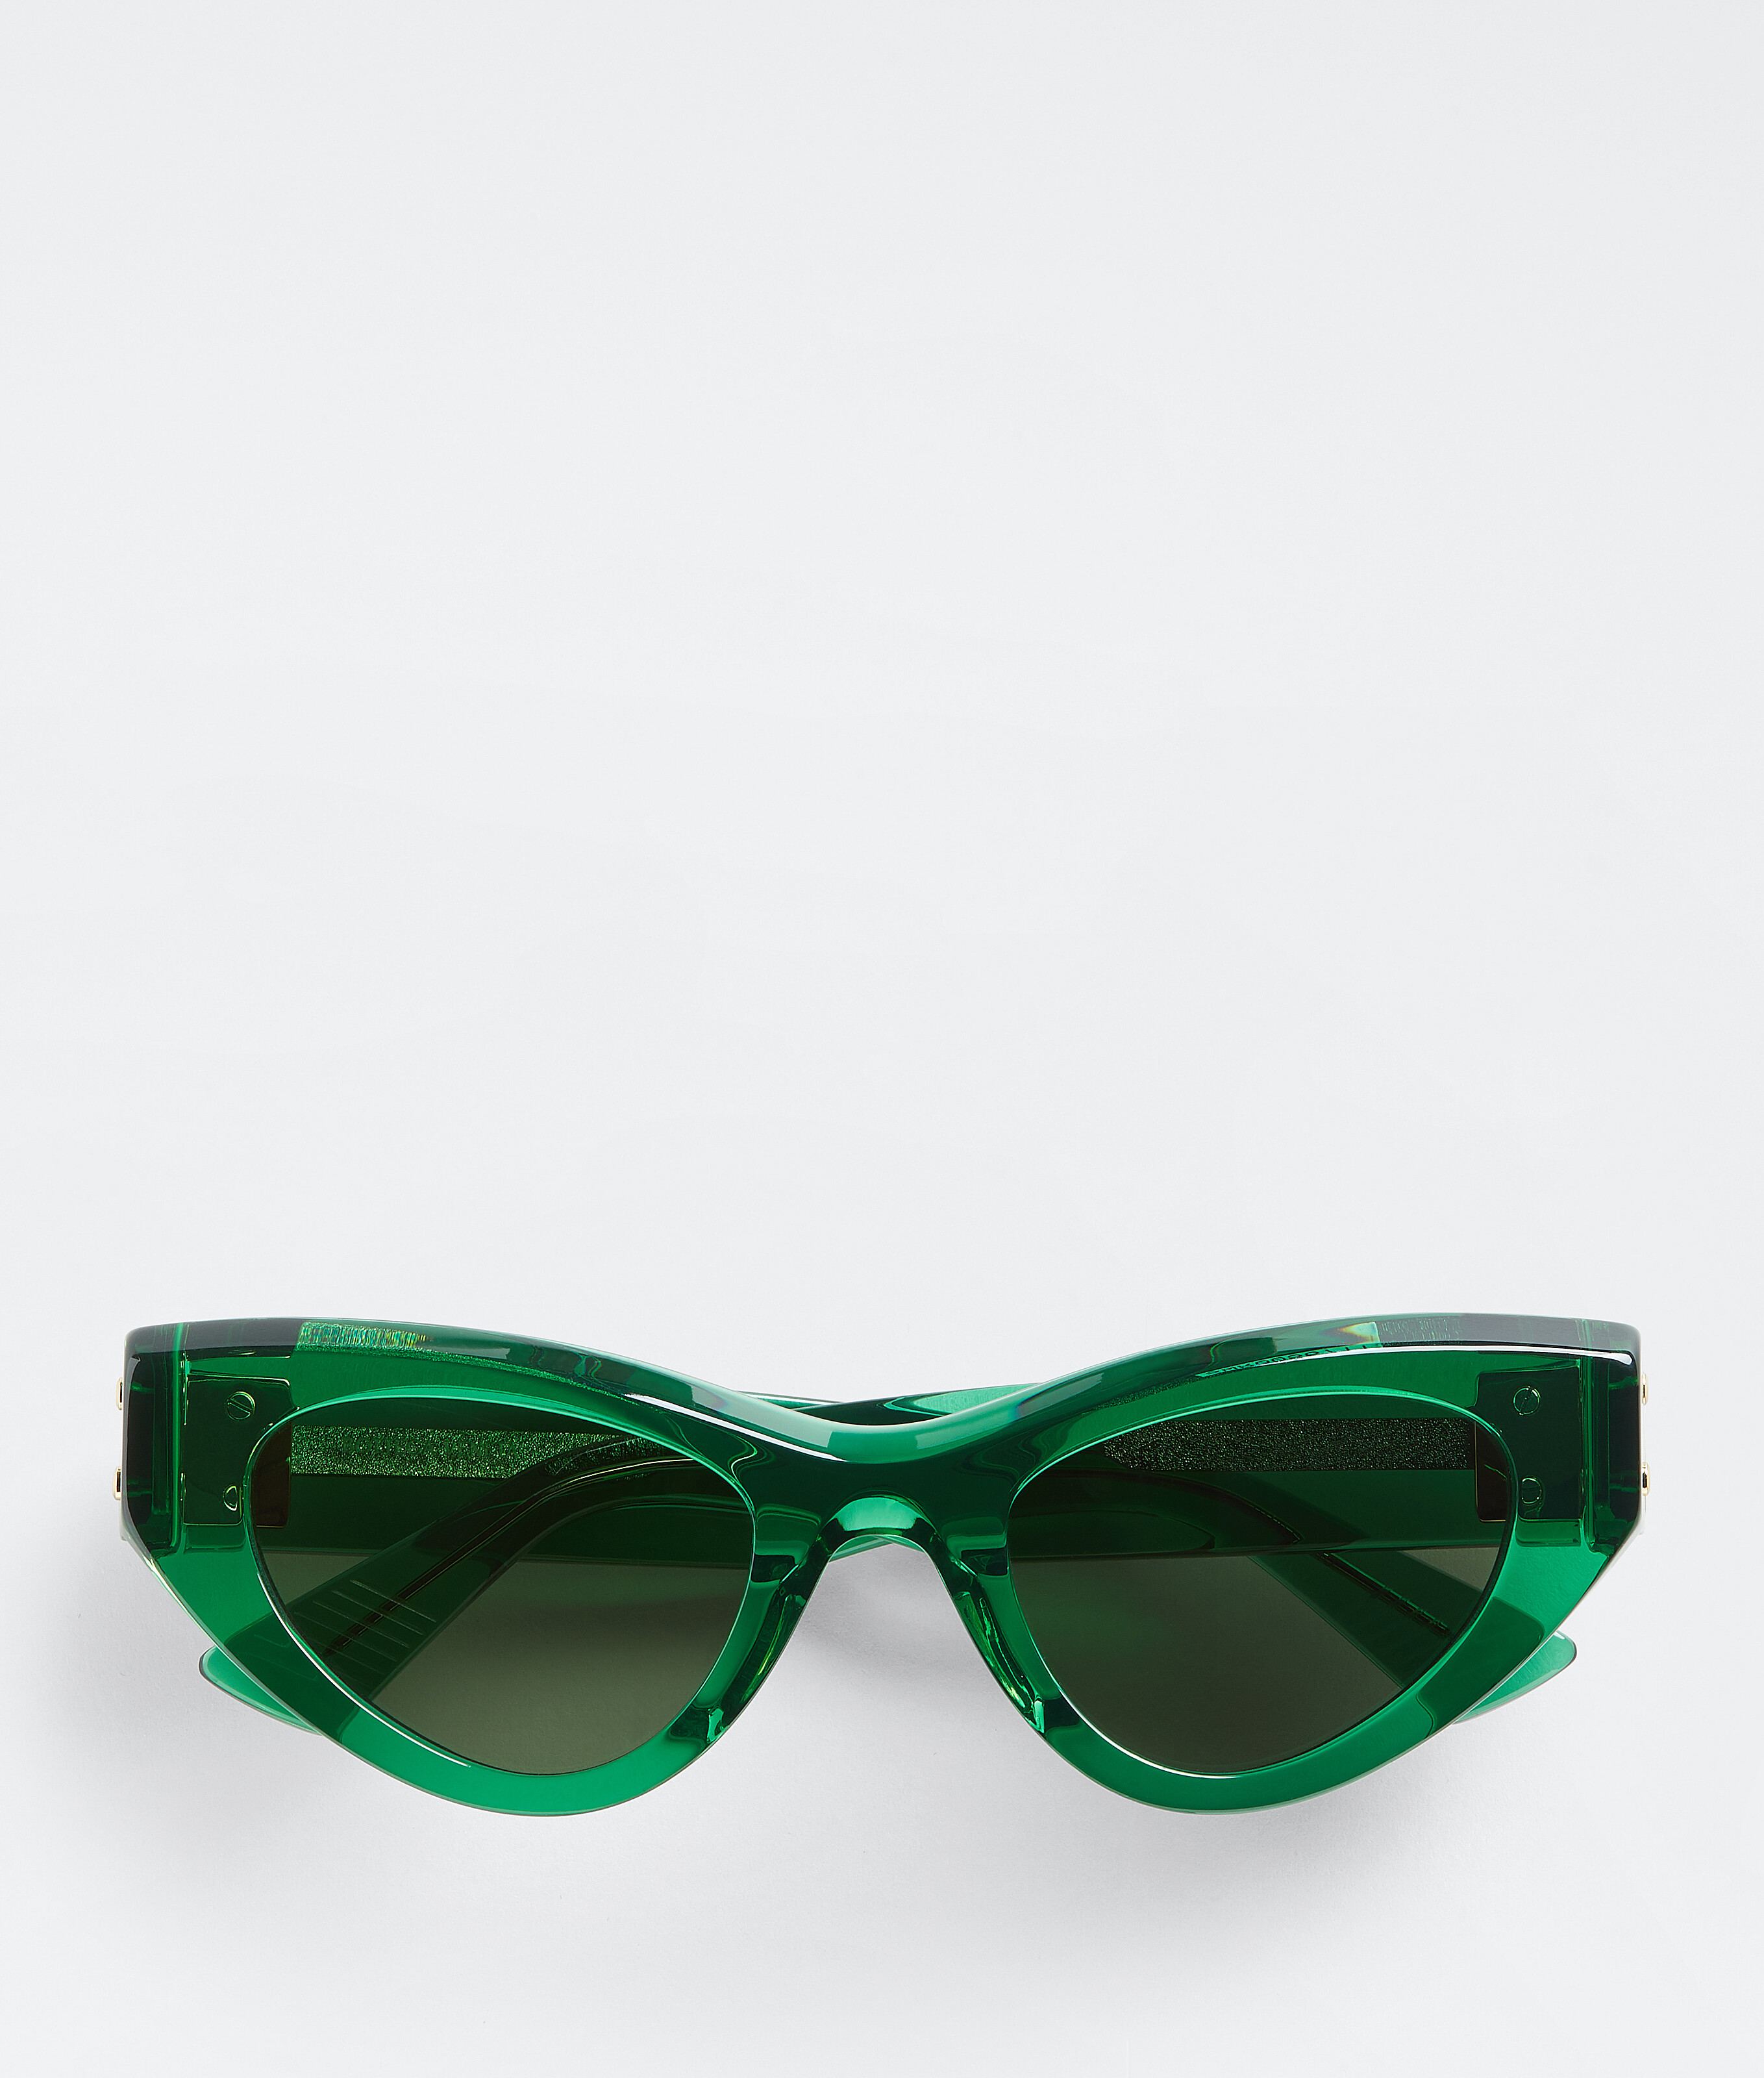 Bottega Veneta® Angle Acetate Cat Eye Sunglasses in Green. Shop online now.